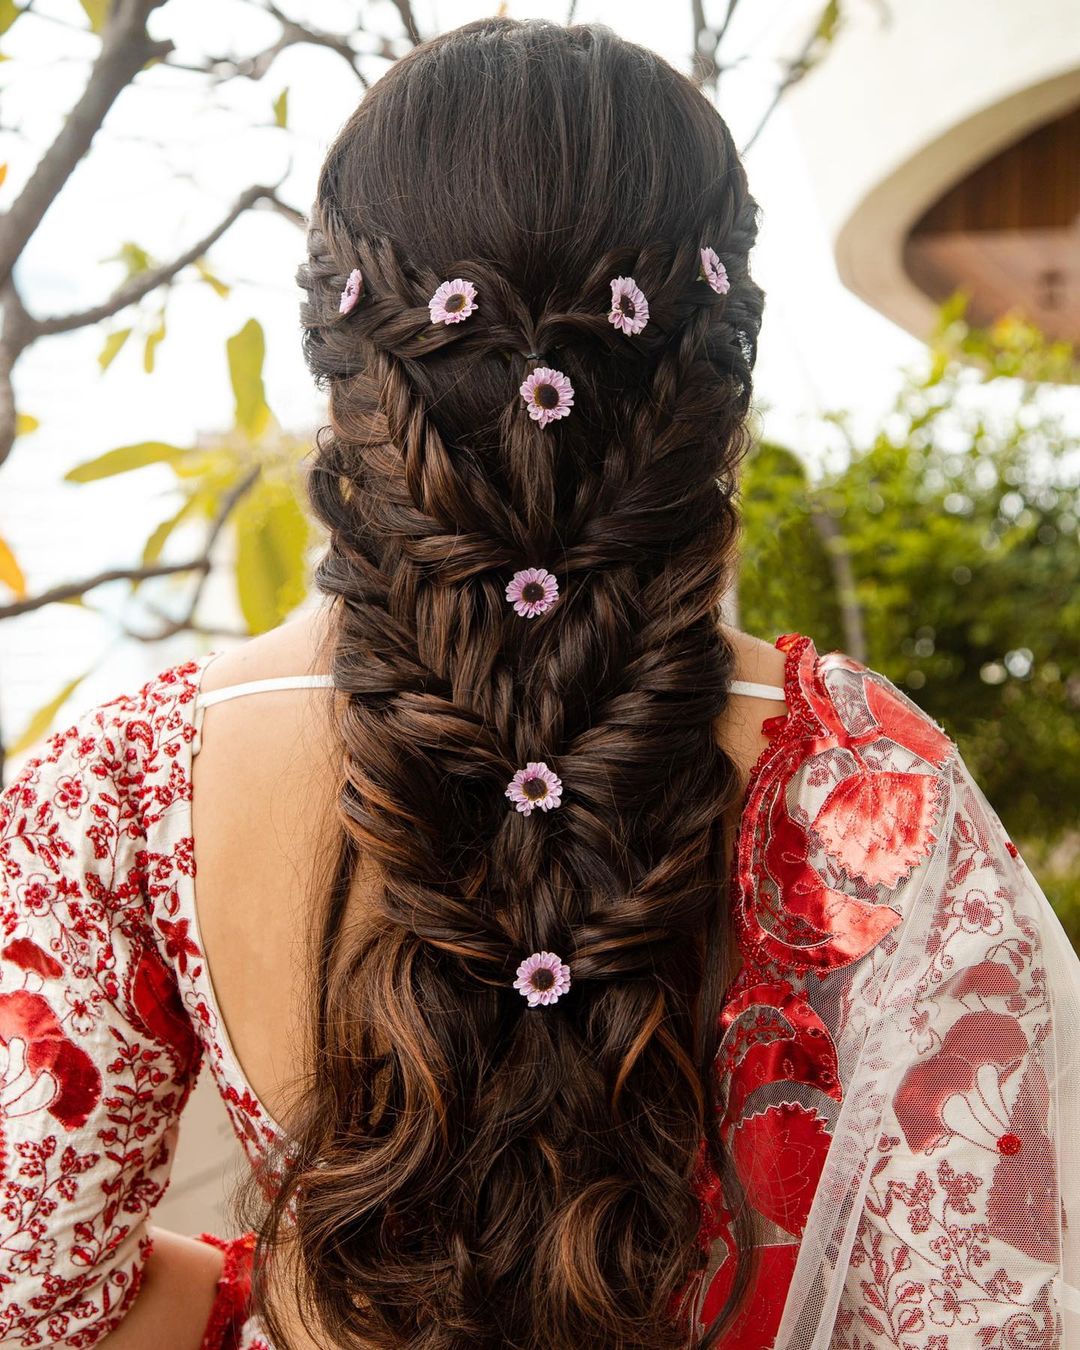 15 easy hairstyles with lehenga - YouTube